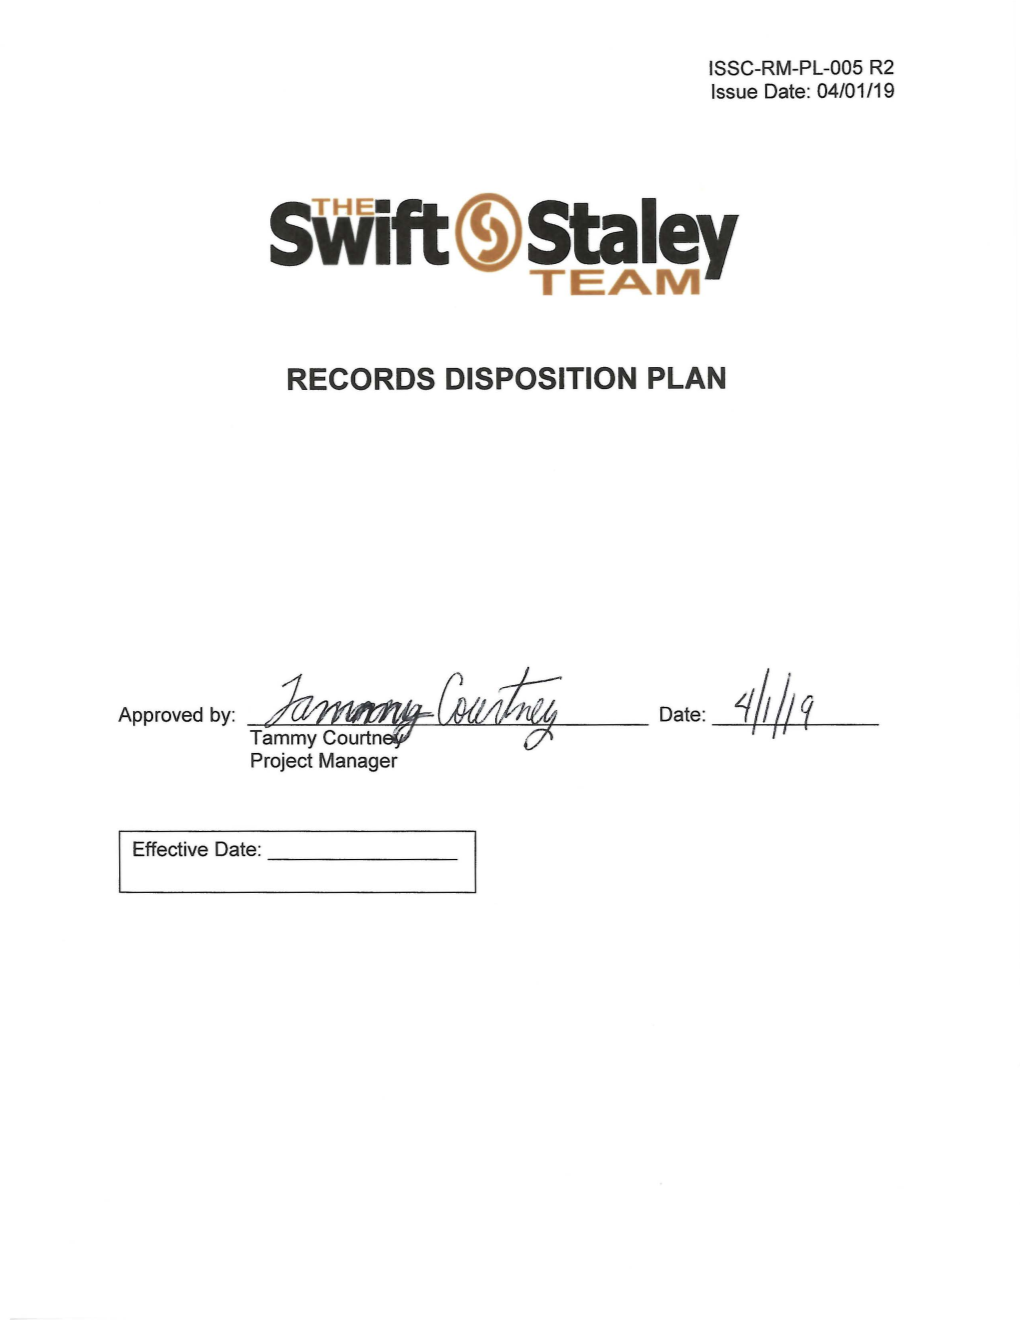 Records Disposition Plan